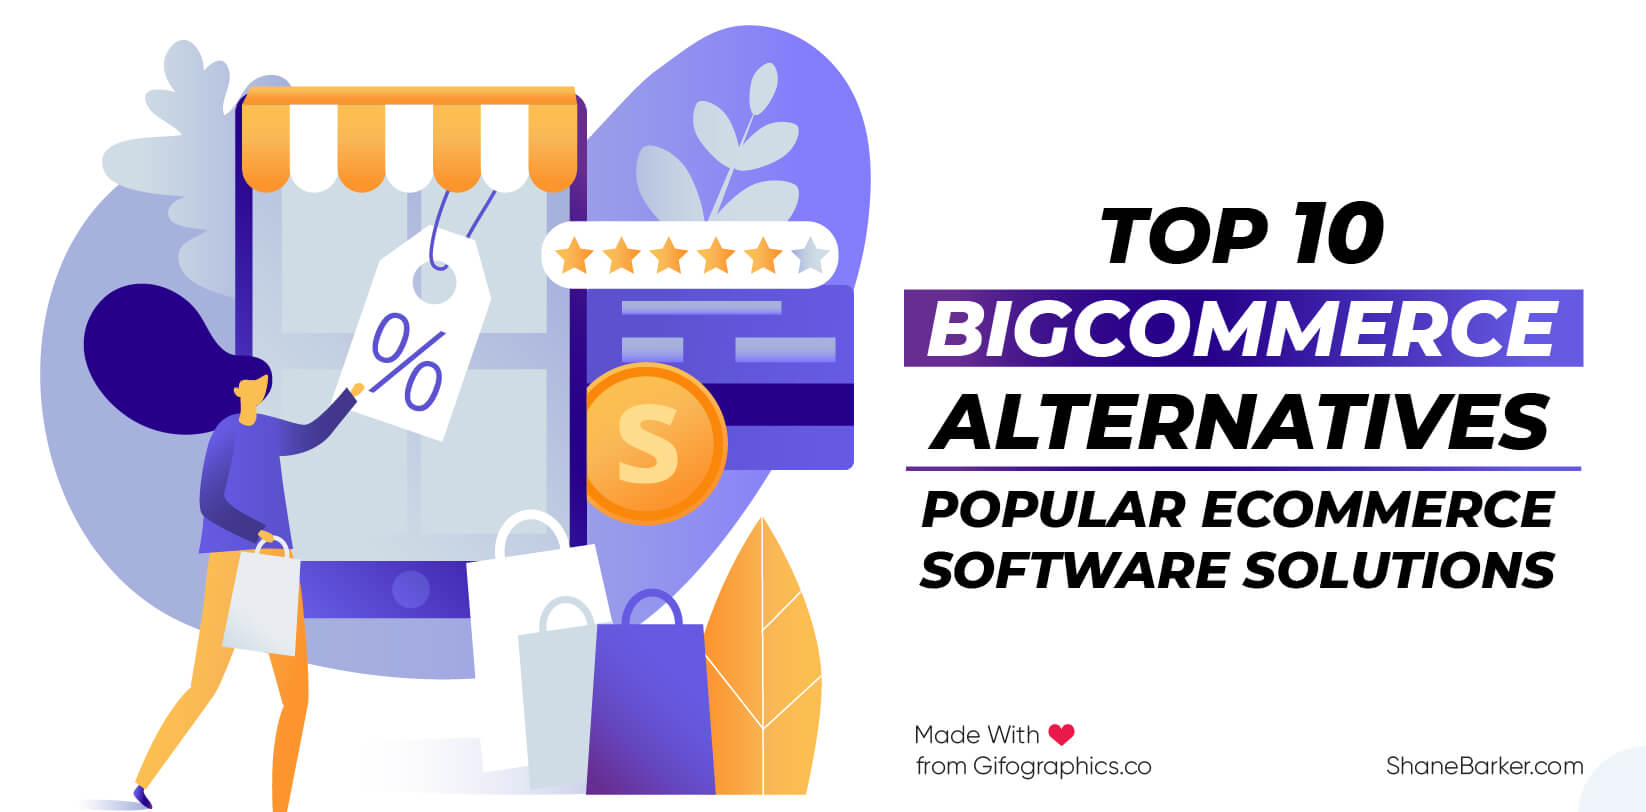 Top 10 BigCommerce Alternatives Popular Ecommerce Software Solutions